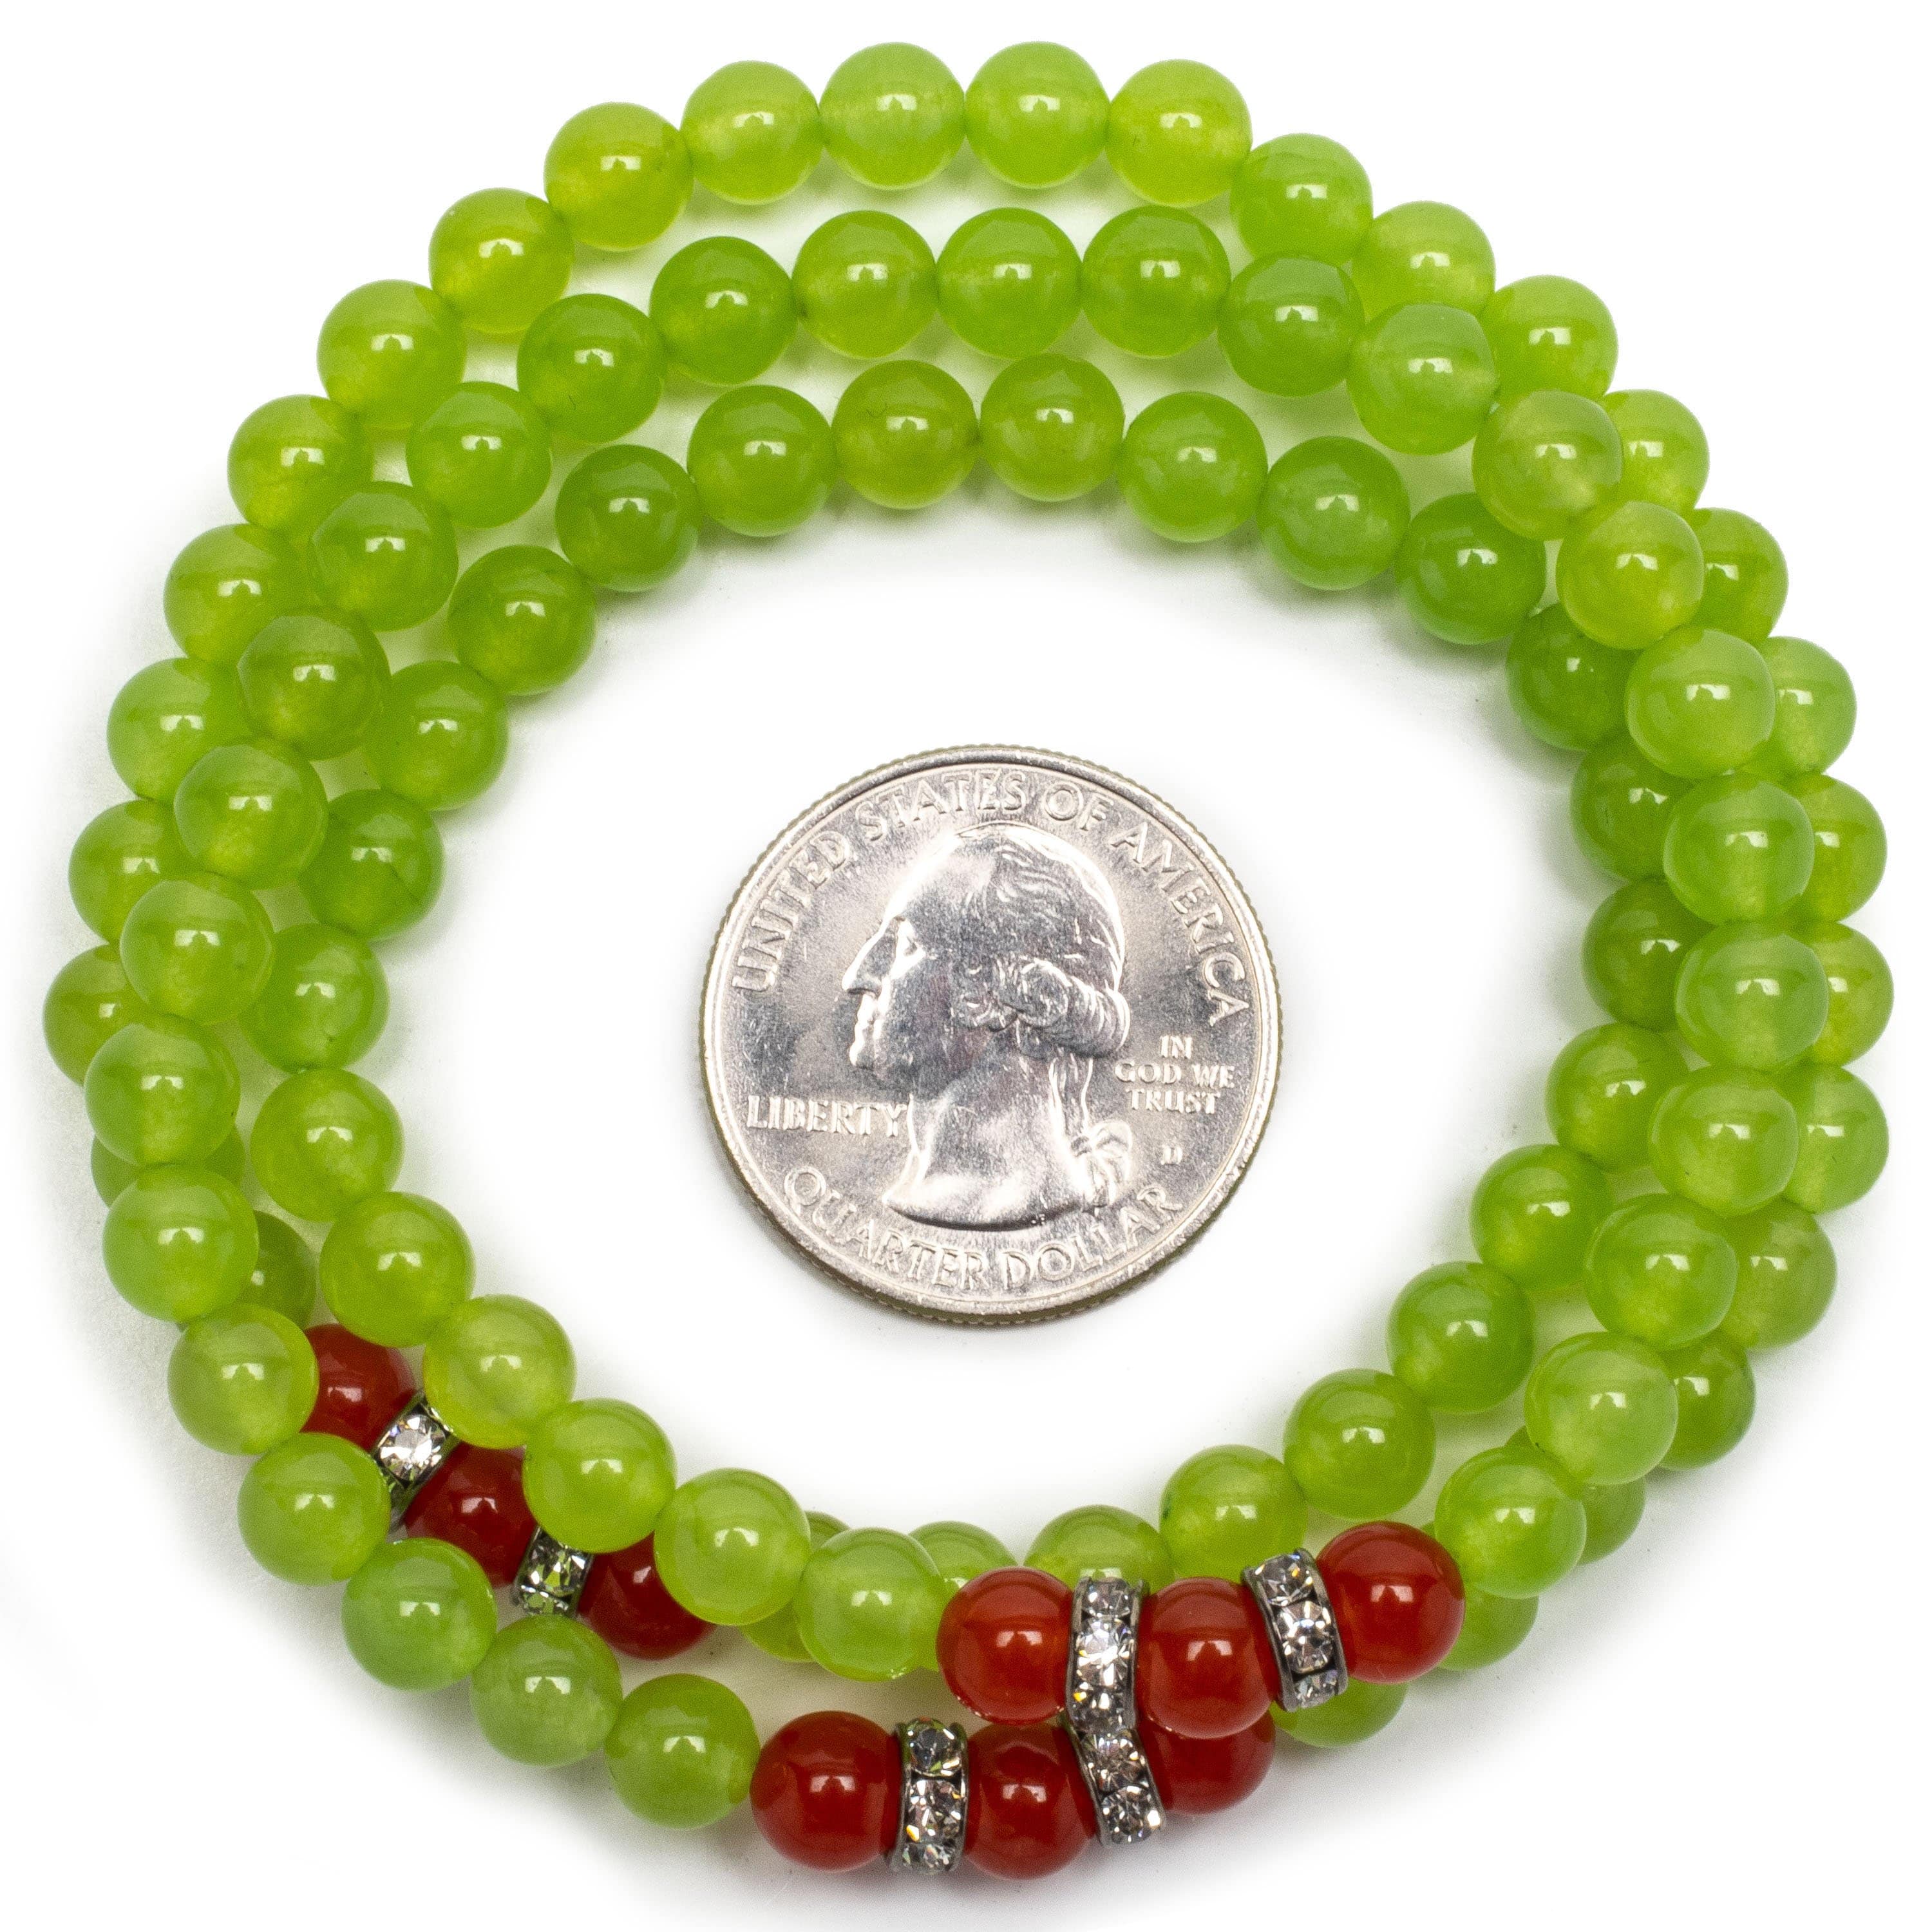 Kalifano Gemstone Bracelets Green Agate 6mm Beads with Carnelian and Crystal Accent Beads Triple Wrap Elastic Gemstone Bracelet WHITE-BGI3-046